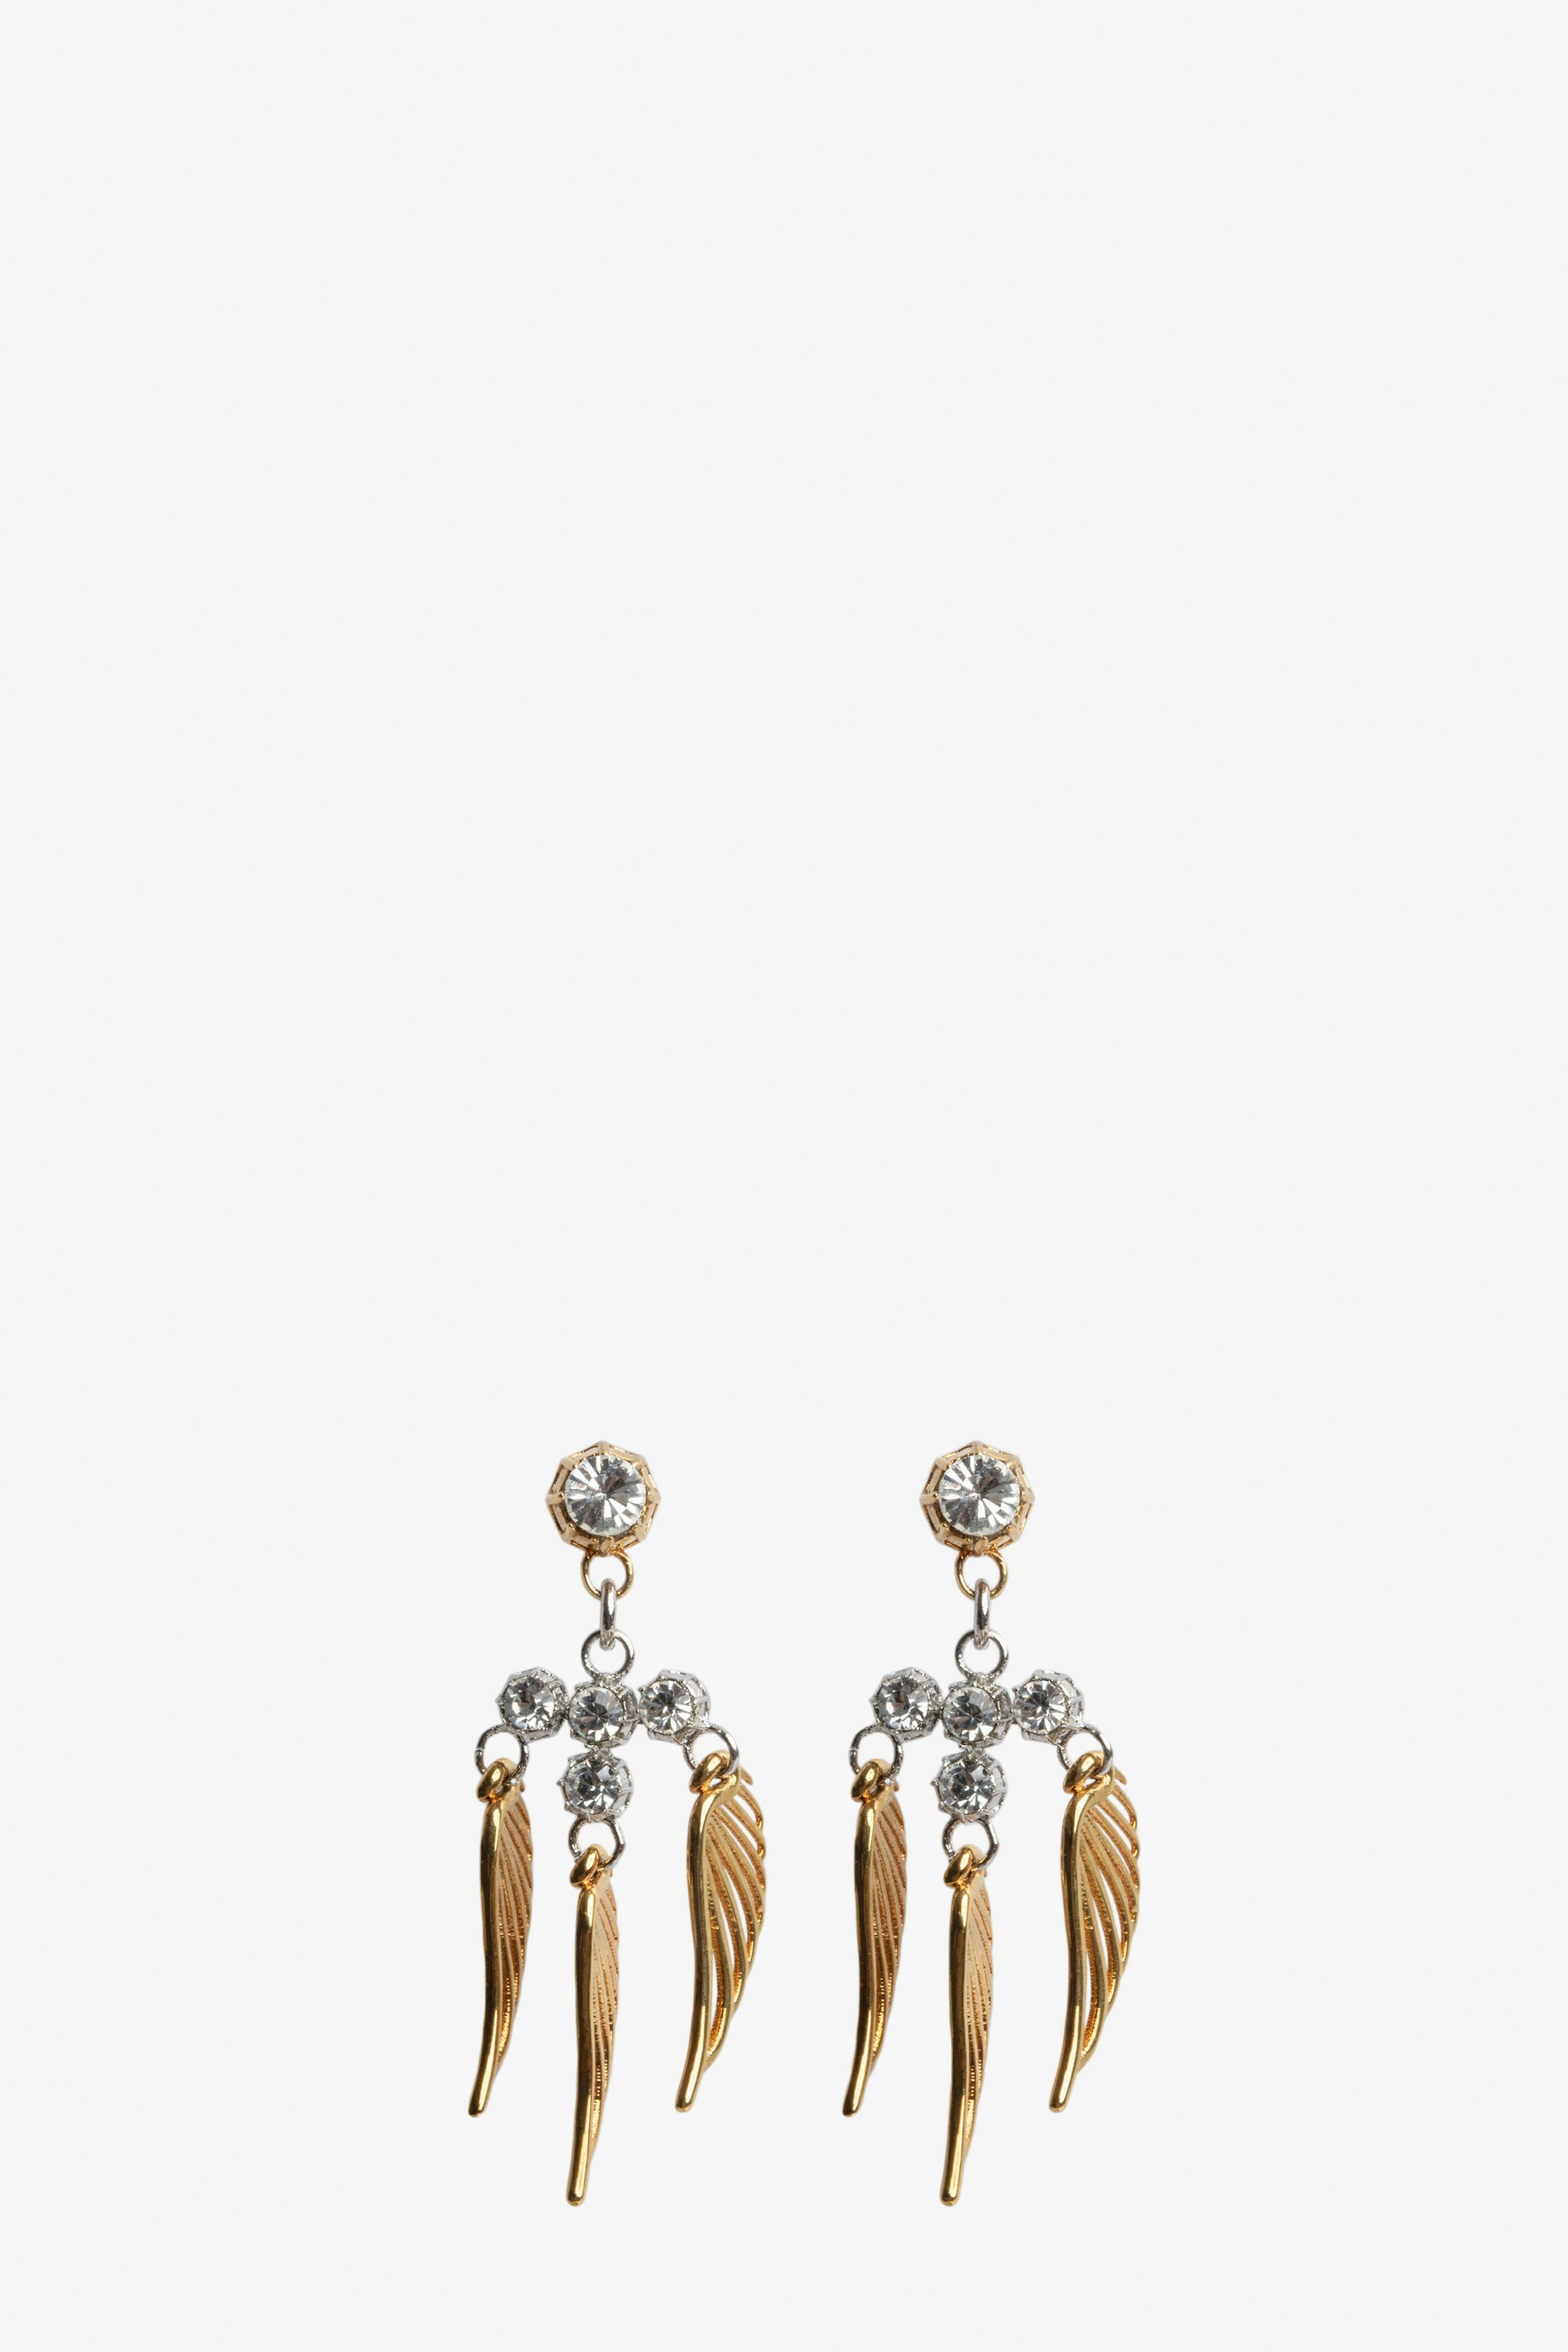 Ohrringe Rock Over Small Damen-Ohrringe mit Flügeln aus goldfarbenem Messing.